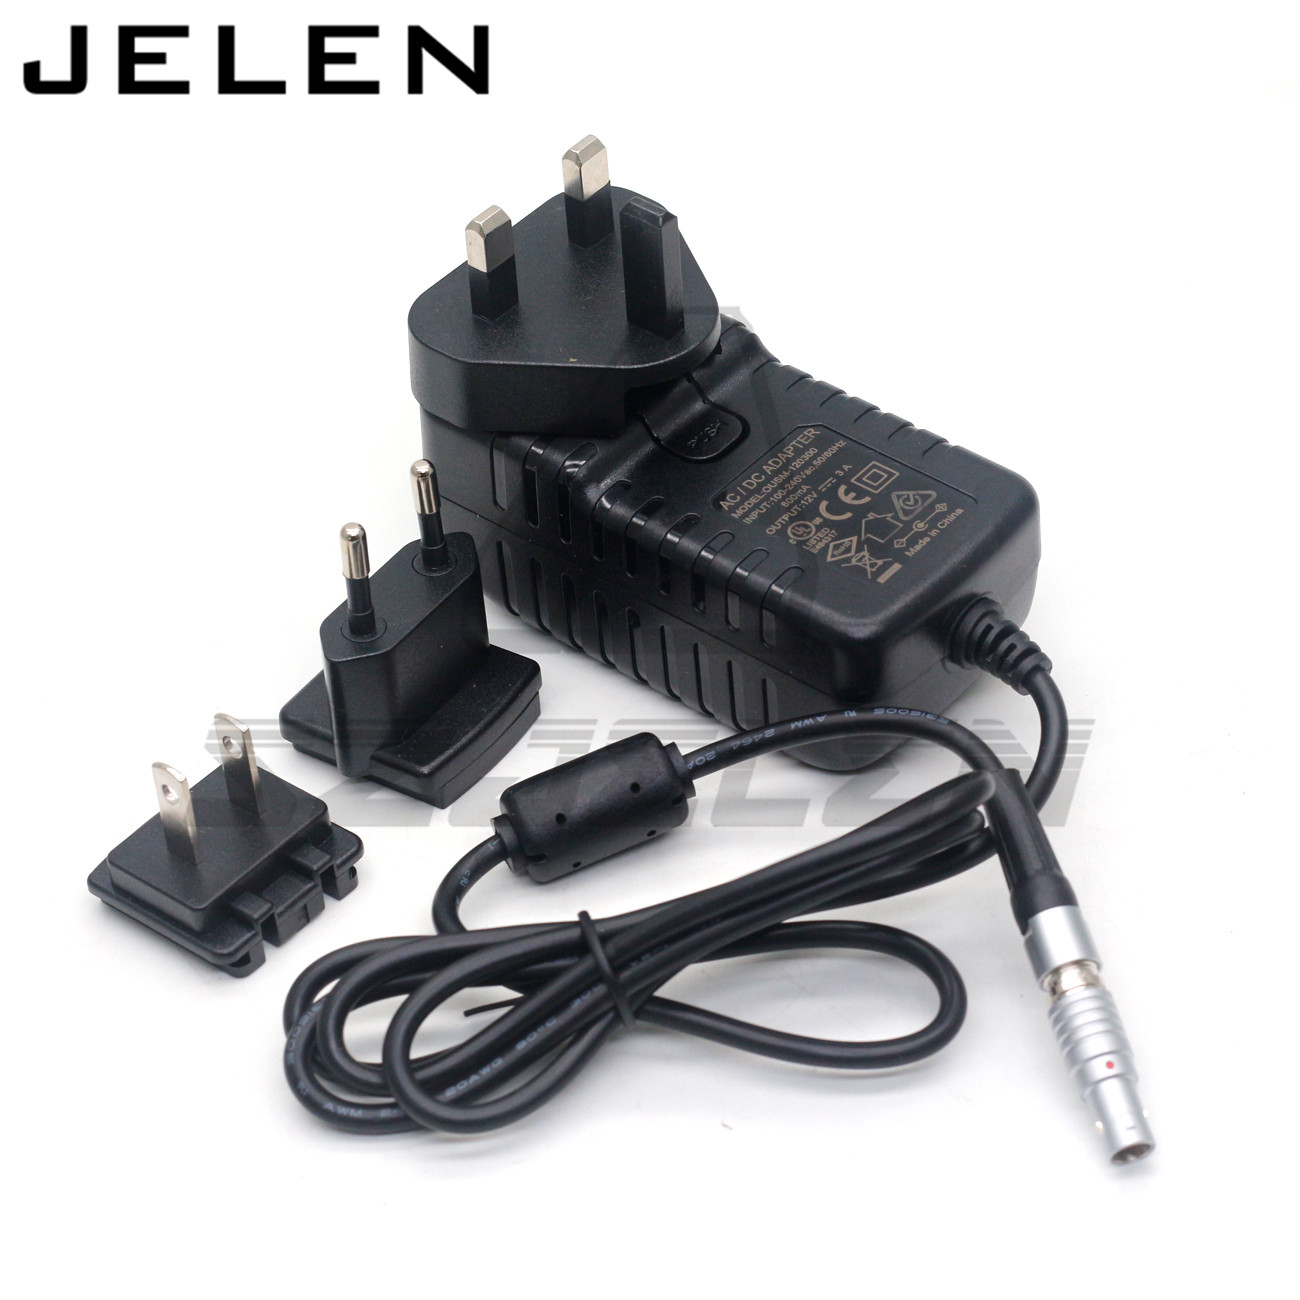 American and European regulations 110 220V adapter to 12V 2 pin elbow Weigu image transmission power cord Teradek polaishop 6